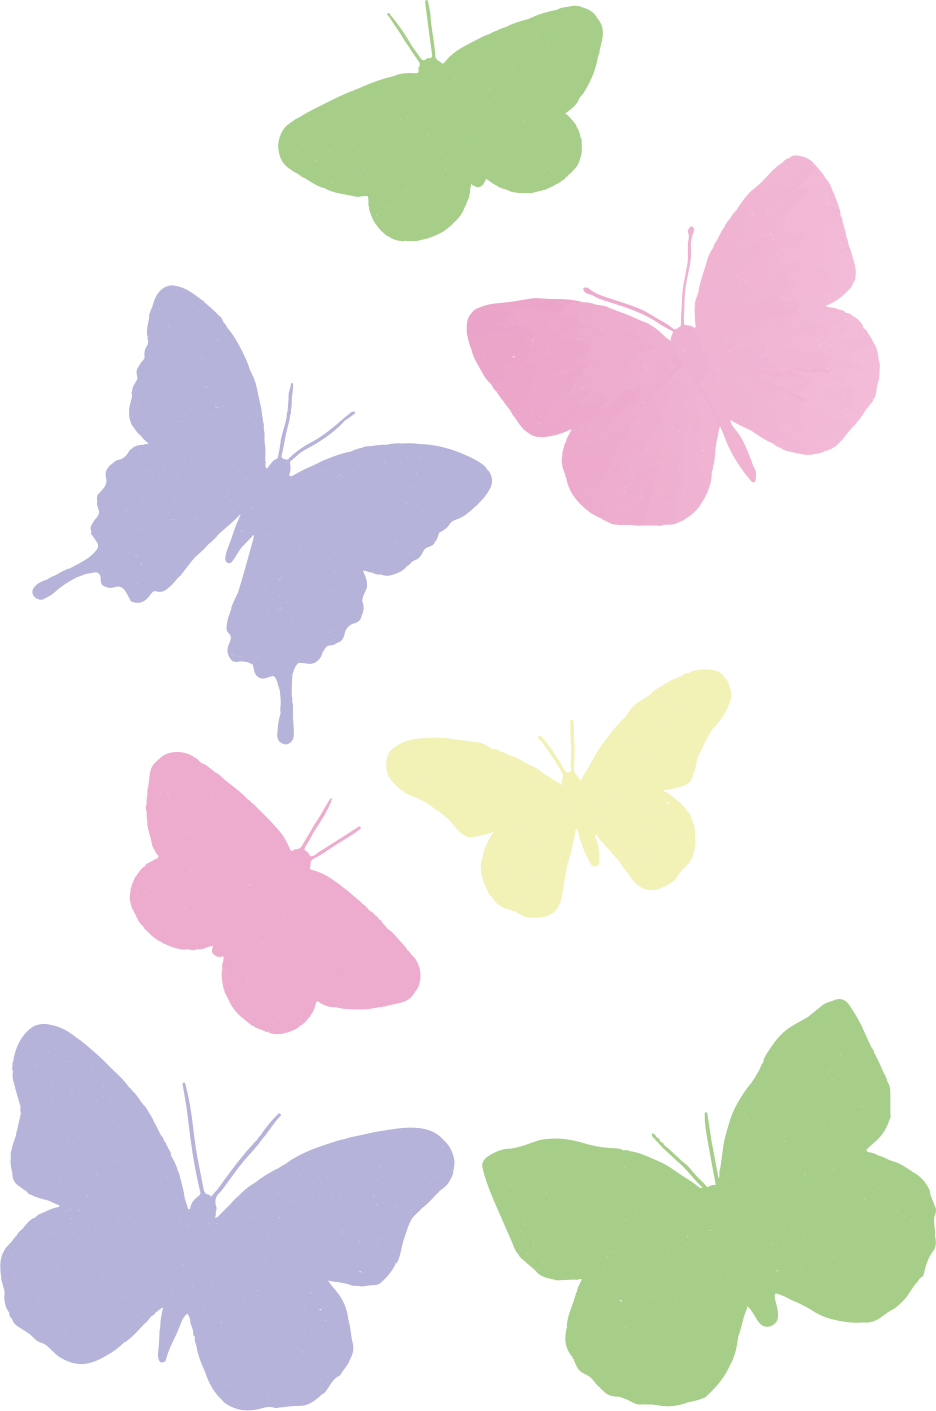 Vinilo de mariposa Mariposas lindas de colores pastel - TenVinilo